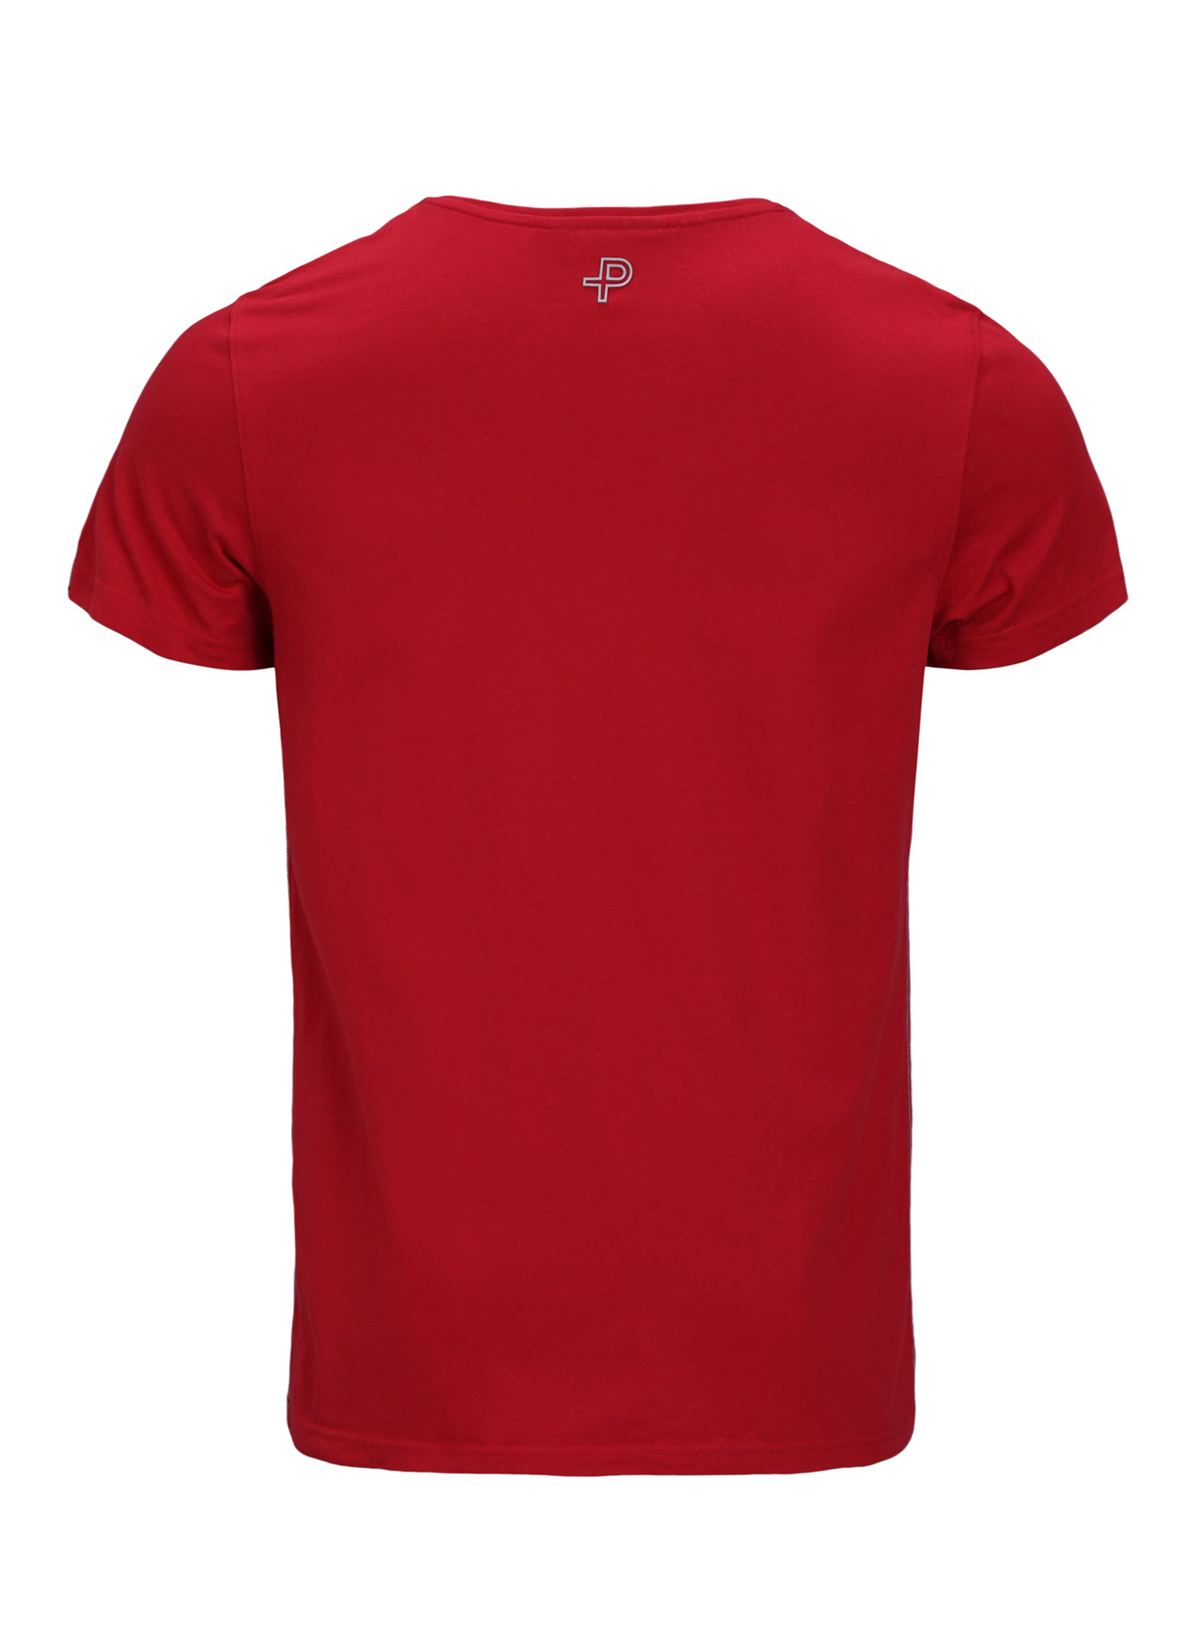 Team ESP Unisex Race Red Badge T-Shirt